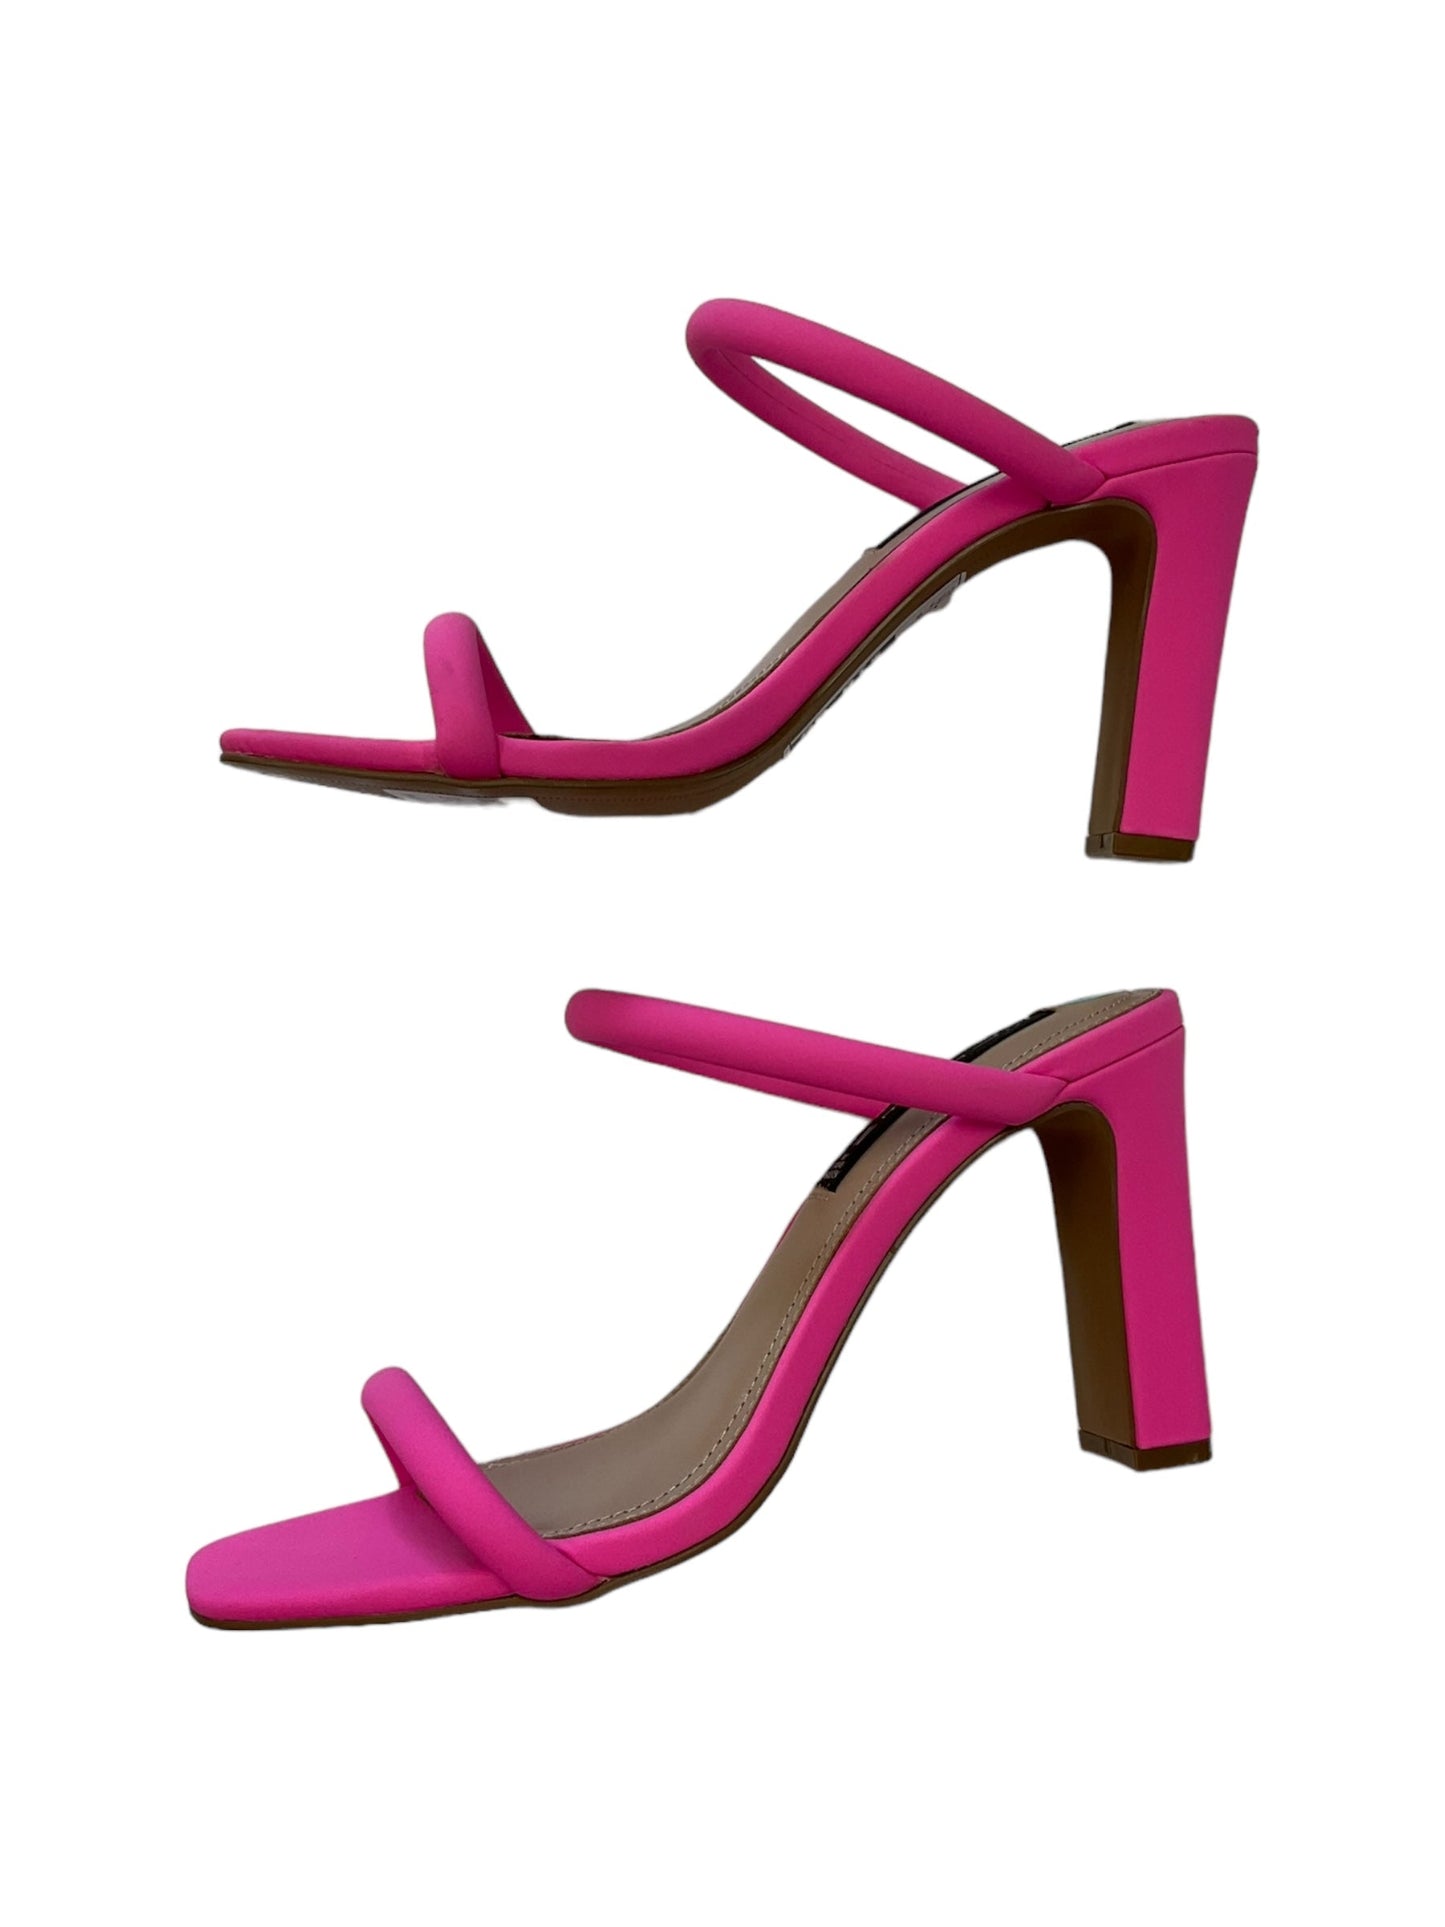 Pink Shoes Heels Stiletto Steve Madden, Size 7.5